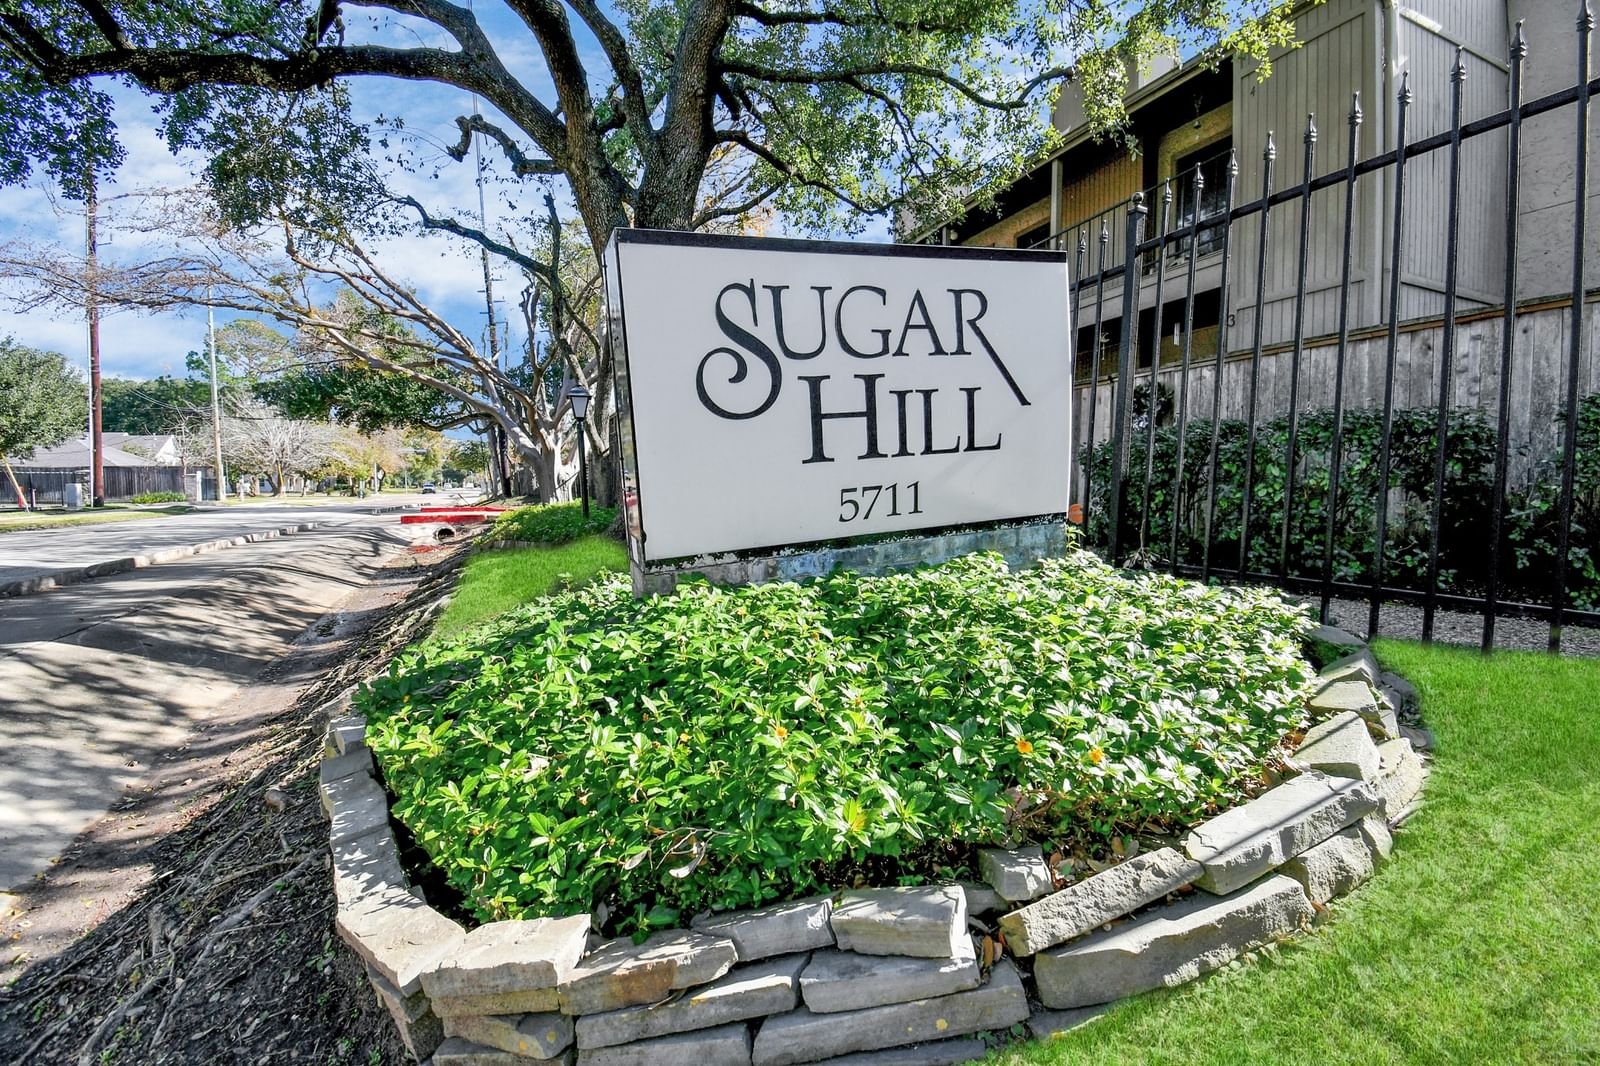 Real estate property located at 5711 Sugar Hill #6, Harris, Sugar Hill Condo, Houston, TX, US